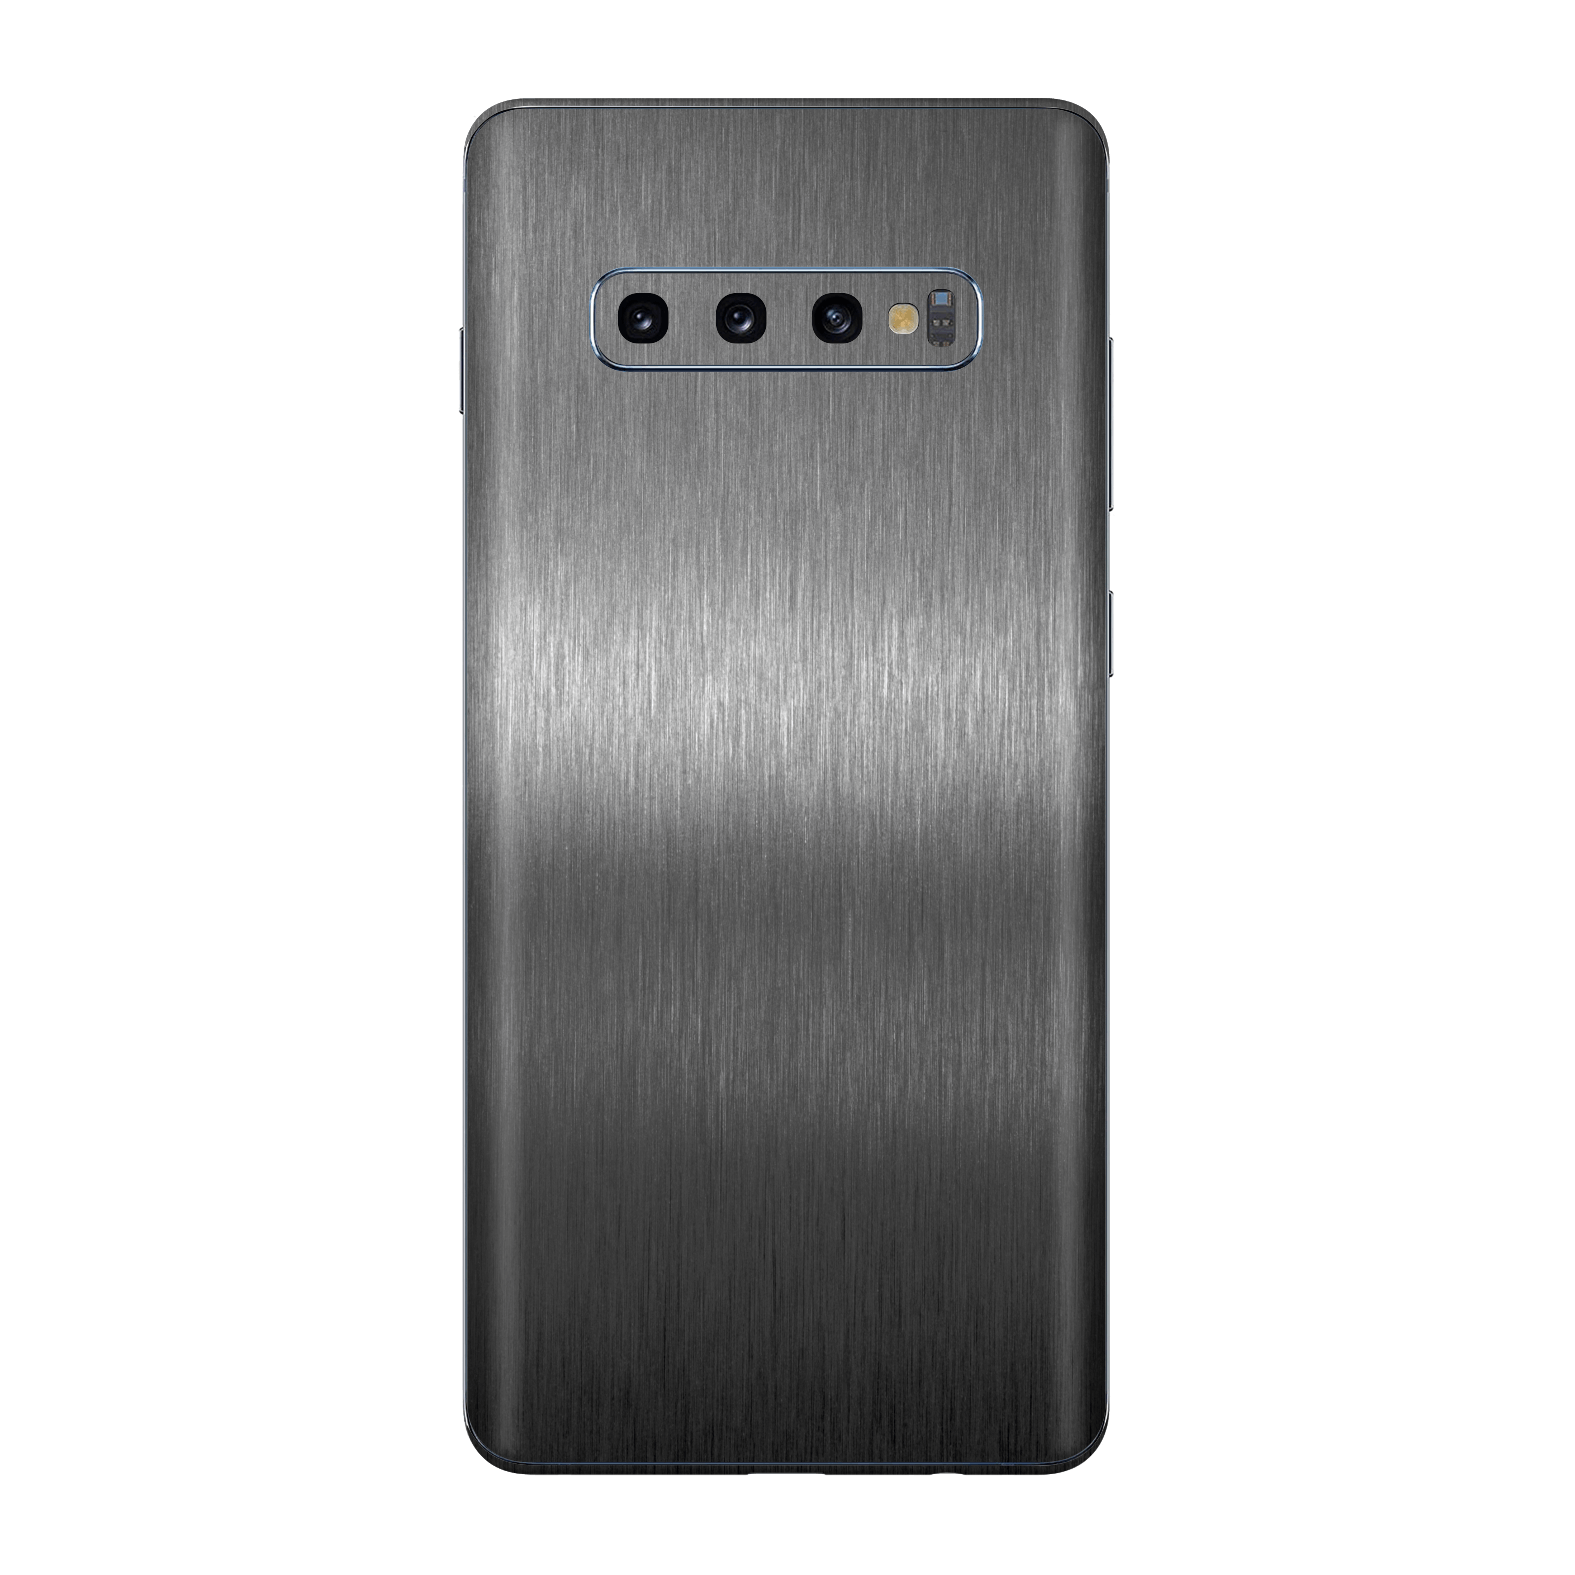 Samsung Galaxy S10+ PLUS Brushed Metal Titanium Metallic Skin Wrap Sticker Decal Cover Protector by EasySkinz | EasySkinz.com